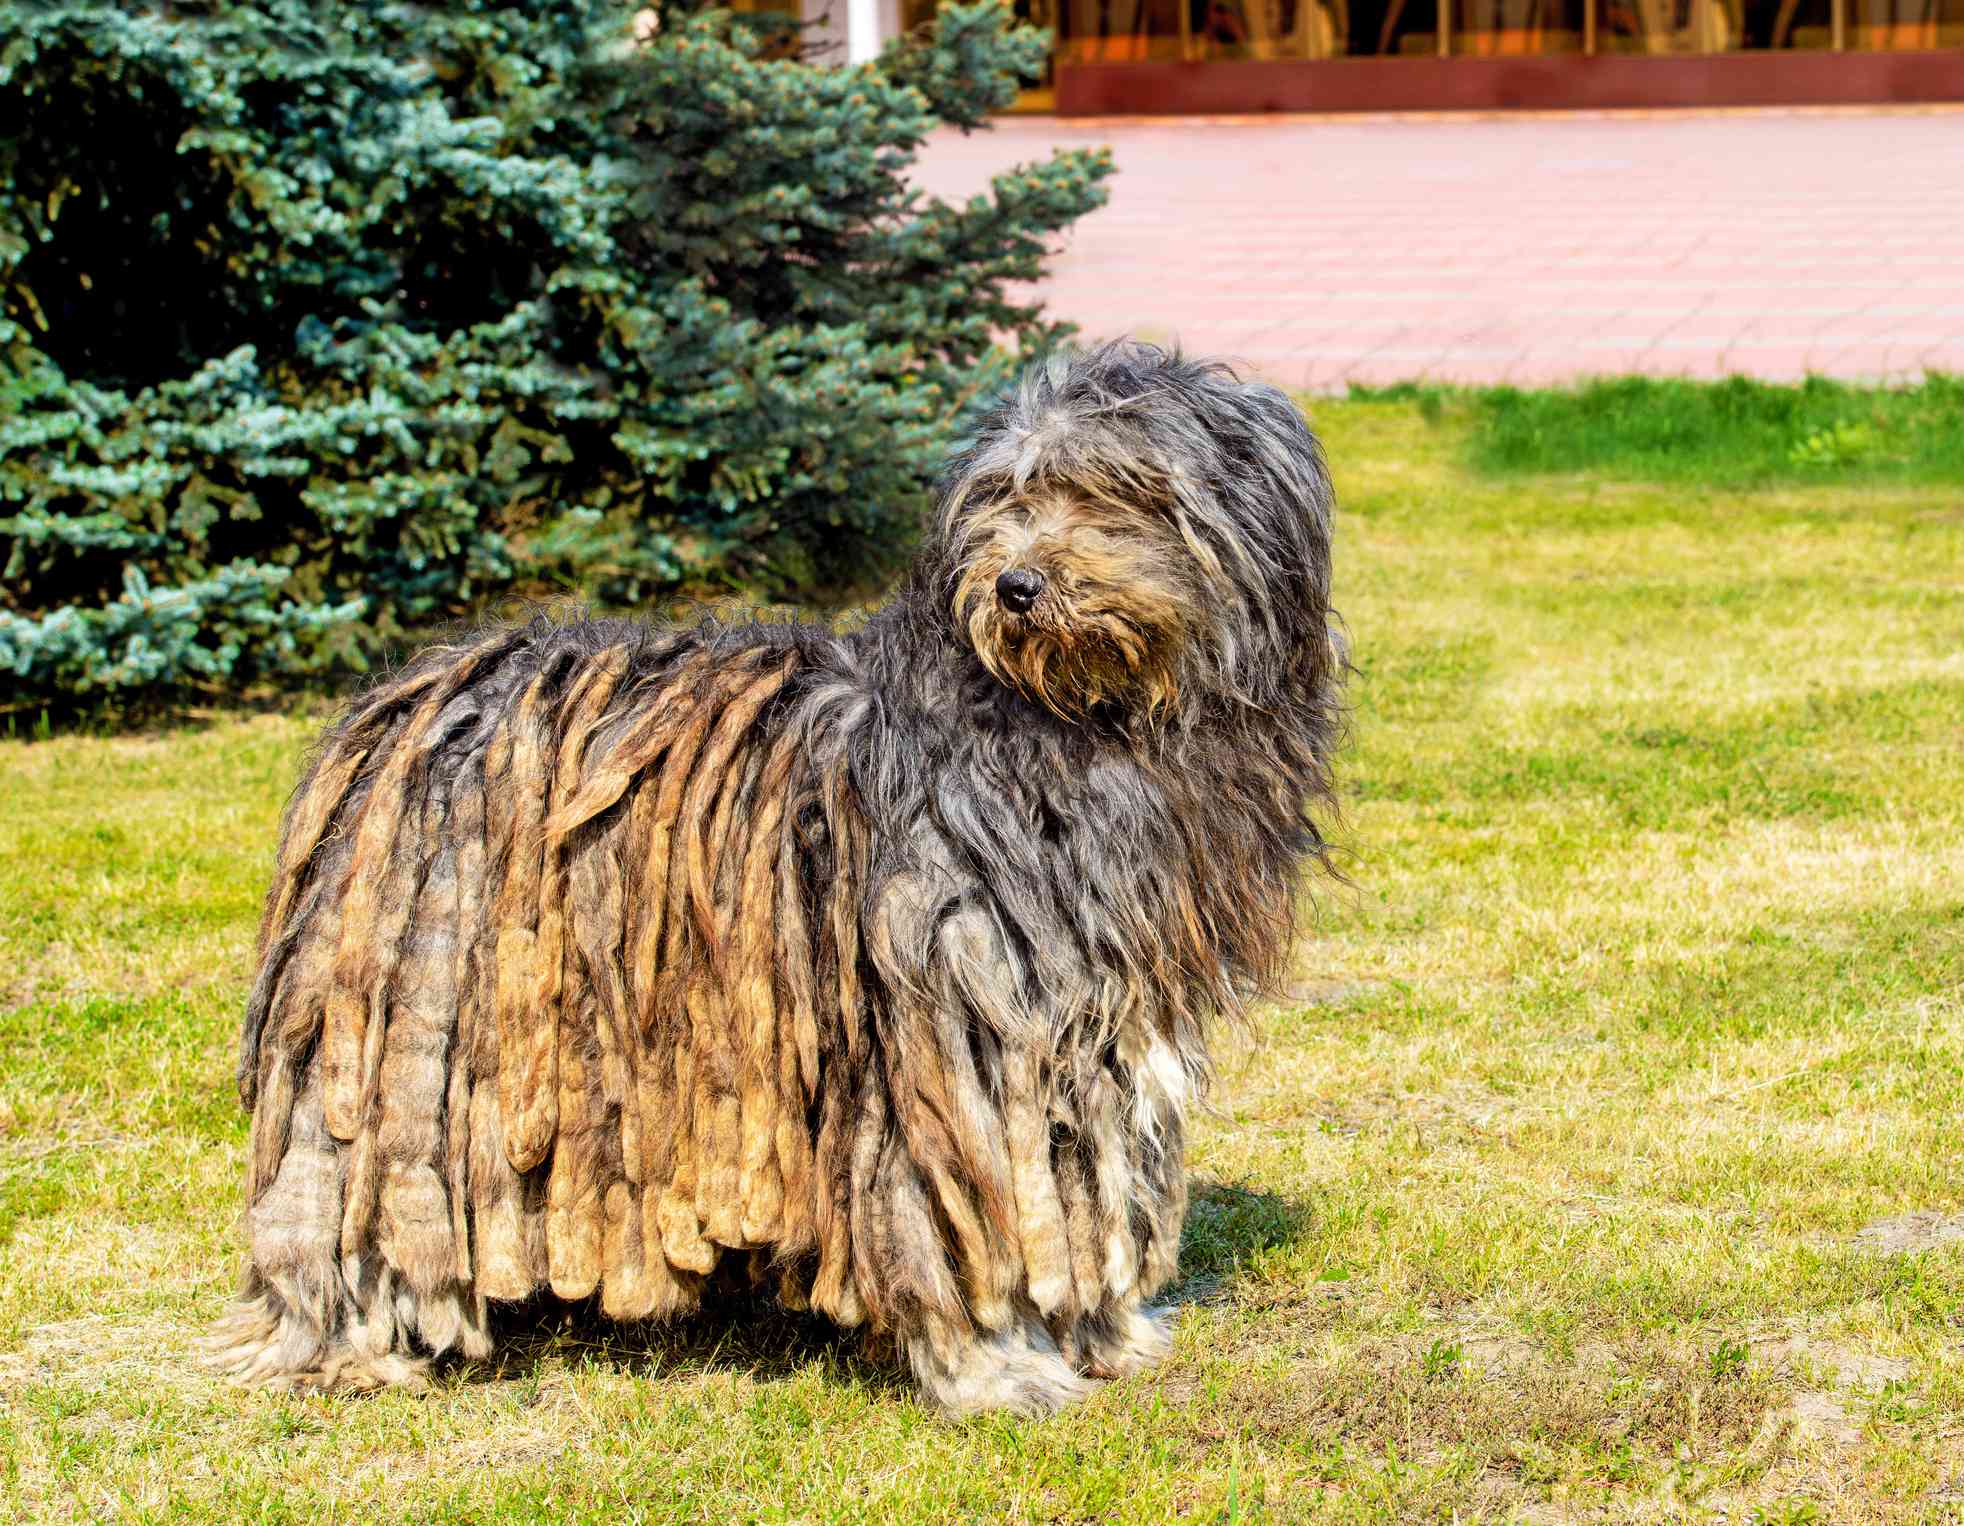 Bergamasco Sheepdog standing on a lawn